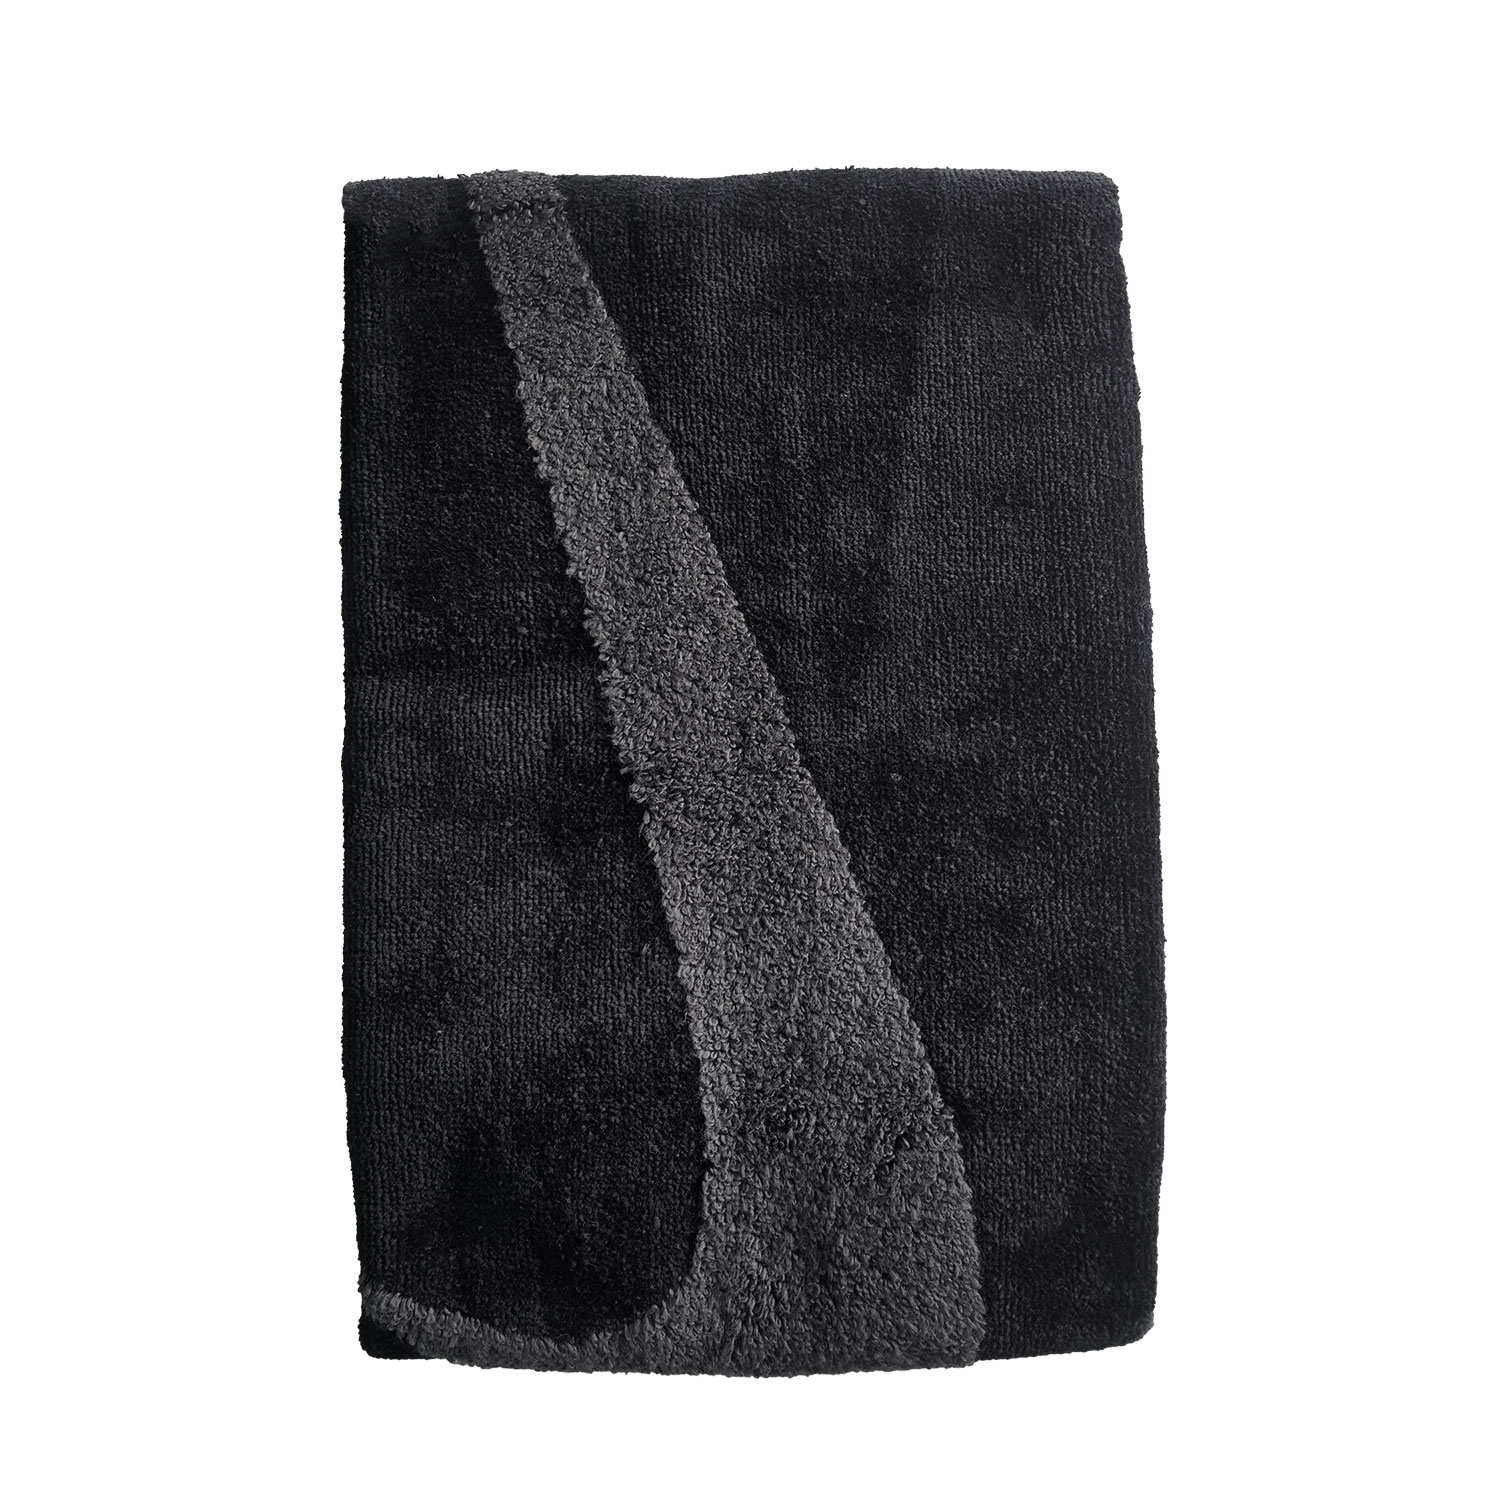 Nike Medium Sport Towel - Black/Anthracite